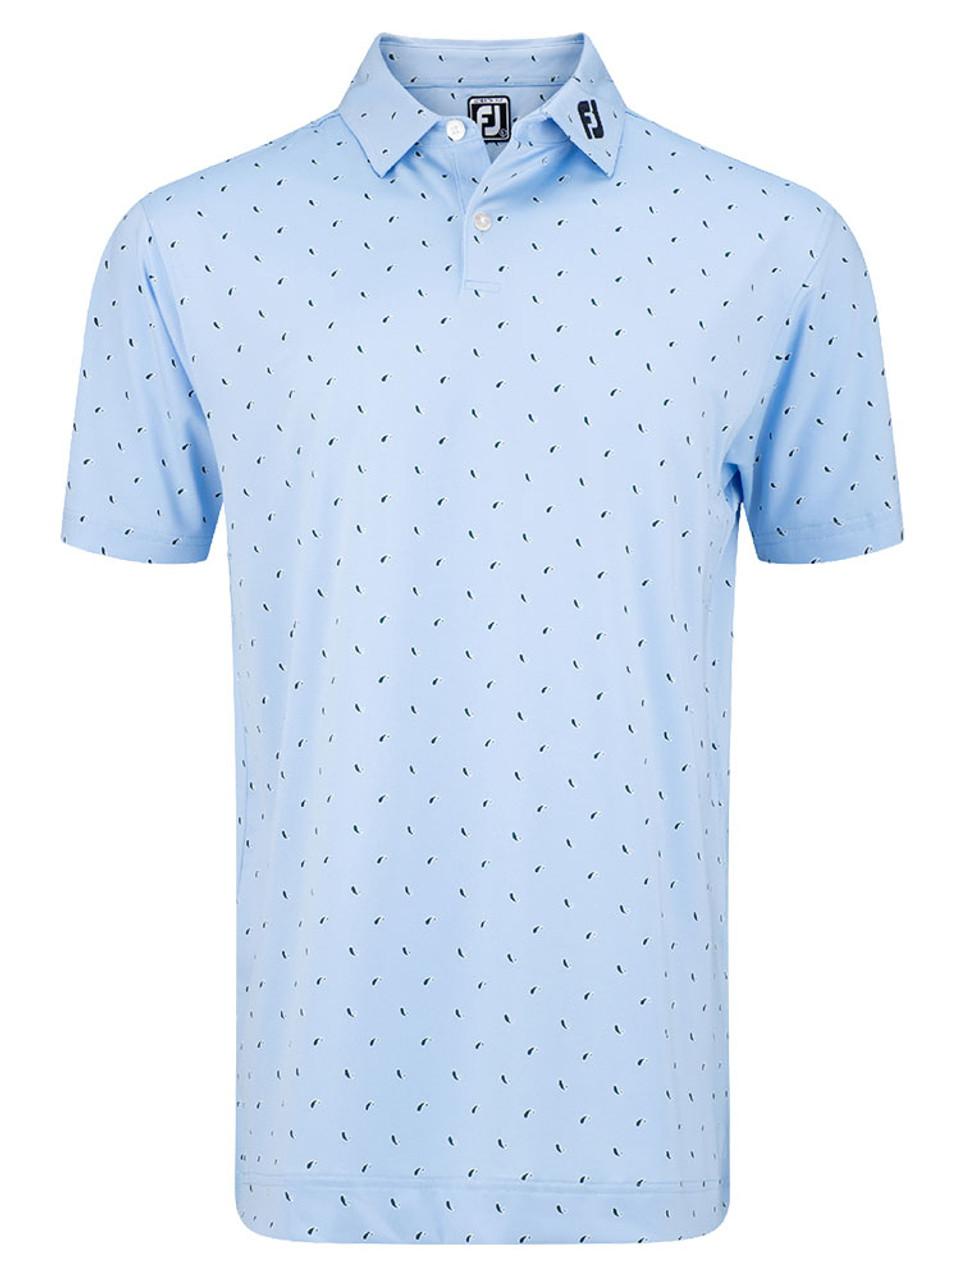 FootJoy Lisle Paisey Print Golf Shirt (Athletic Fit) - Sky/Navy - Mens ...